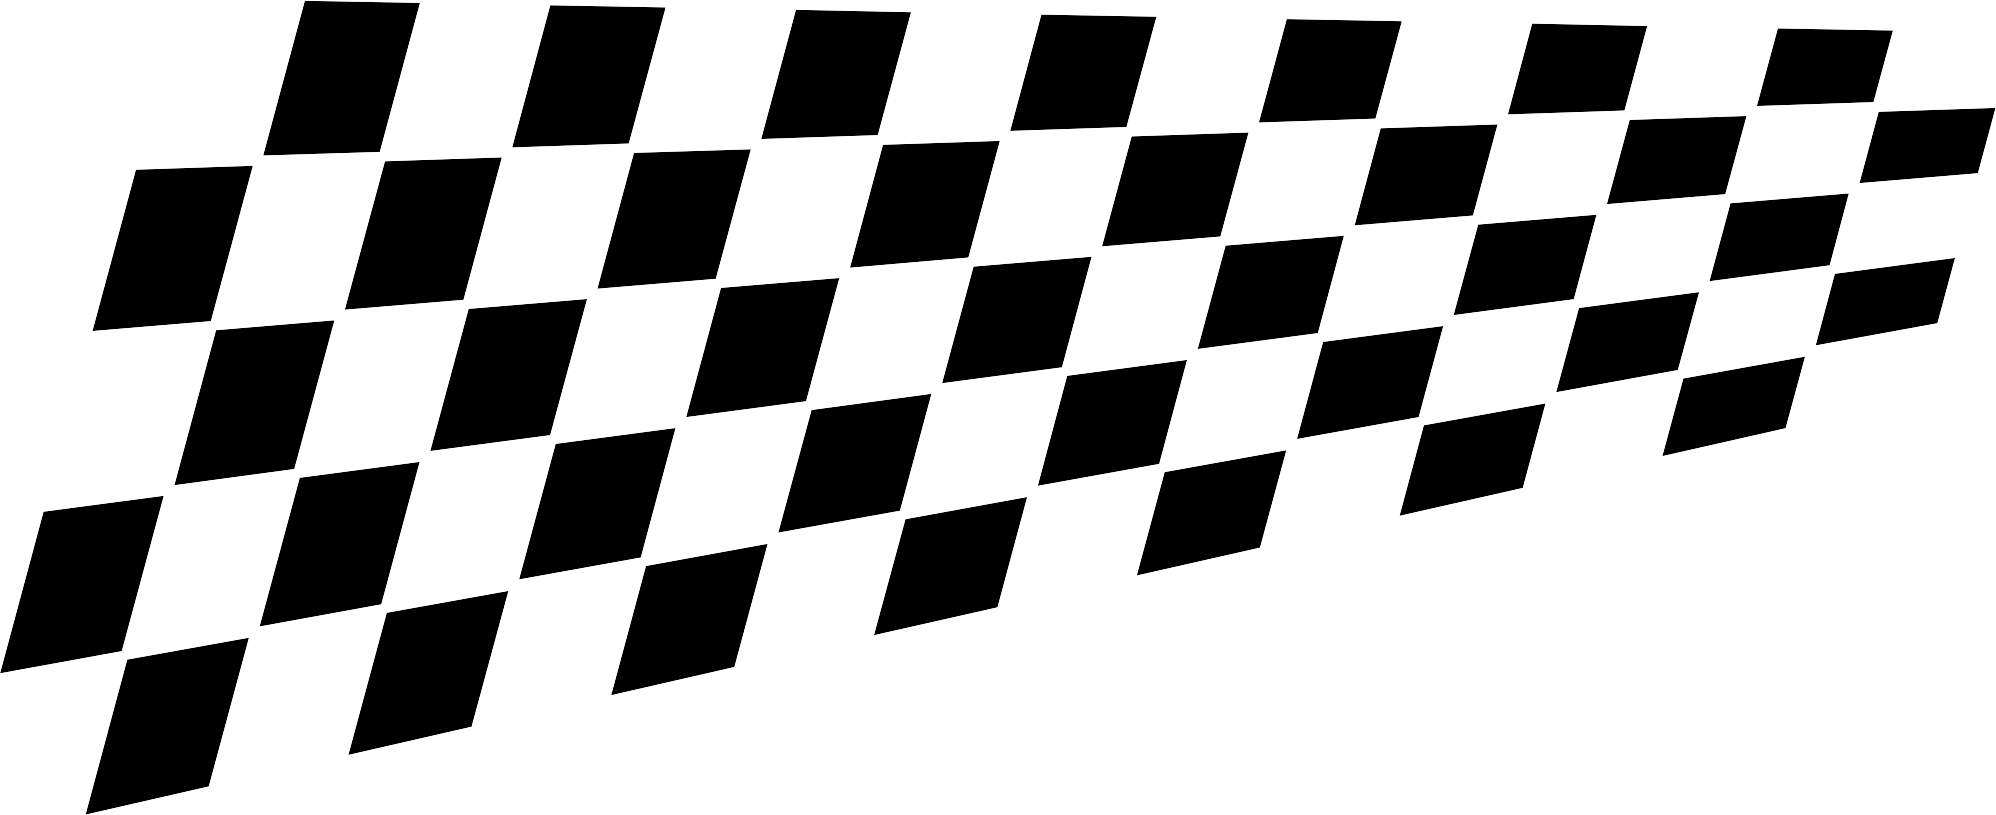 Racing Flag Logo - RACING FLAG - Cliparts.co